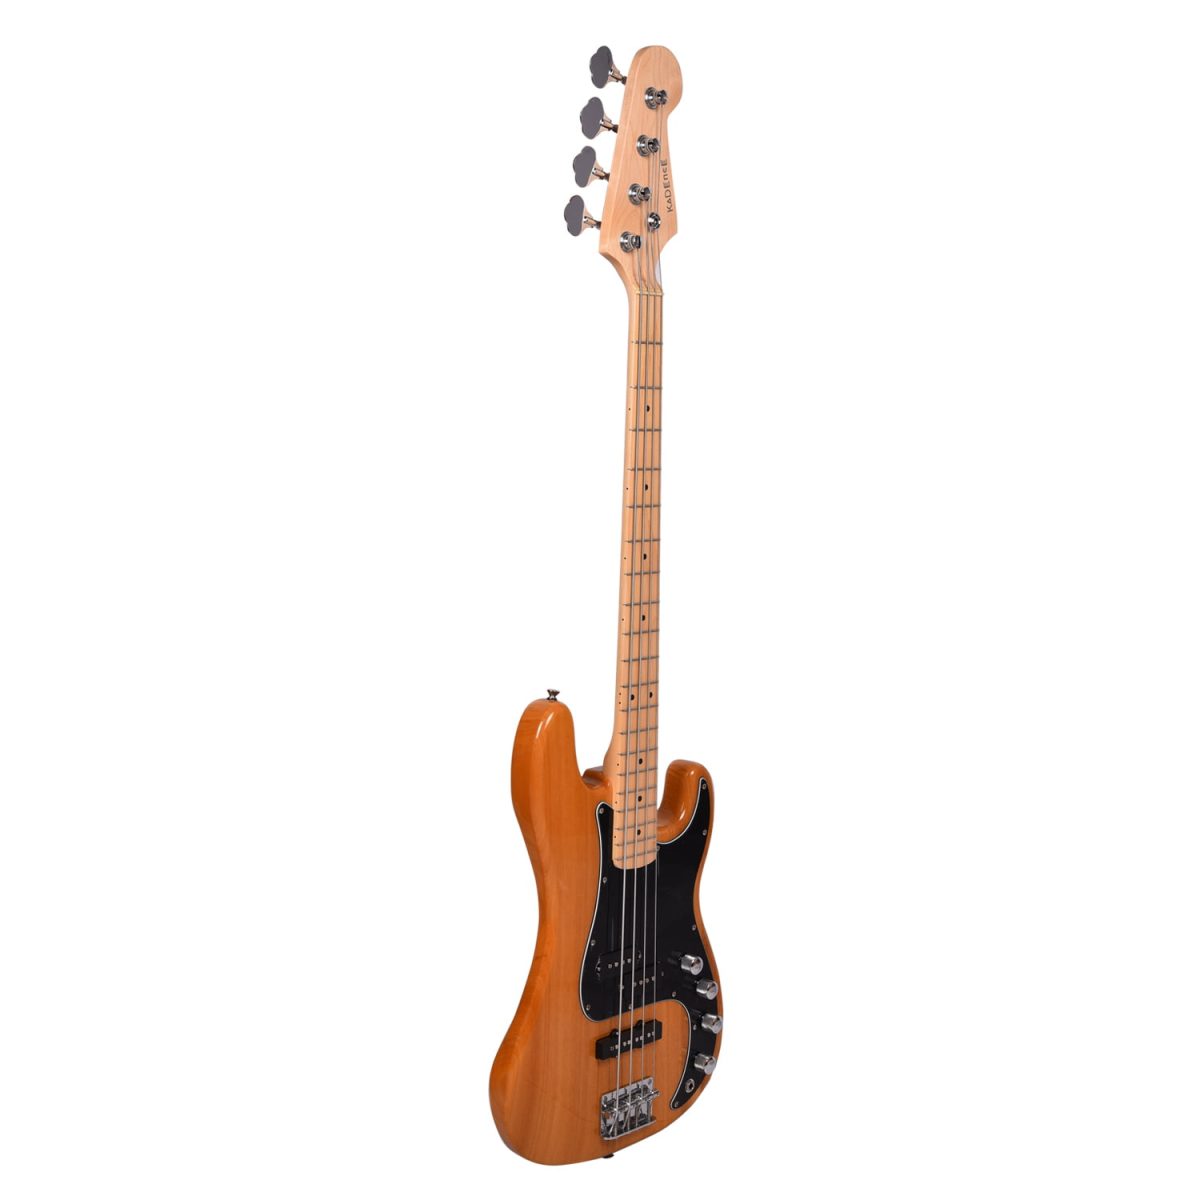 Kadence, Chronicle Series Electric Bass Guitar, Natural Ash Wood EB-06 NAT